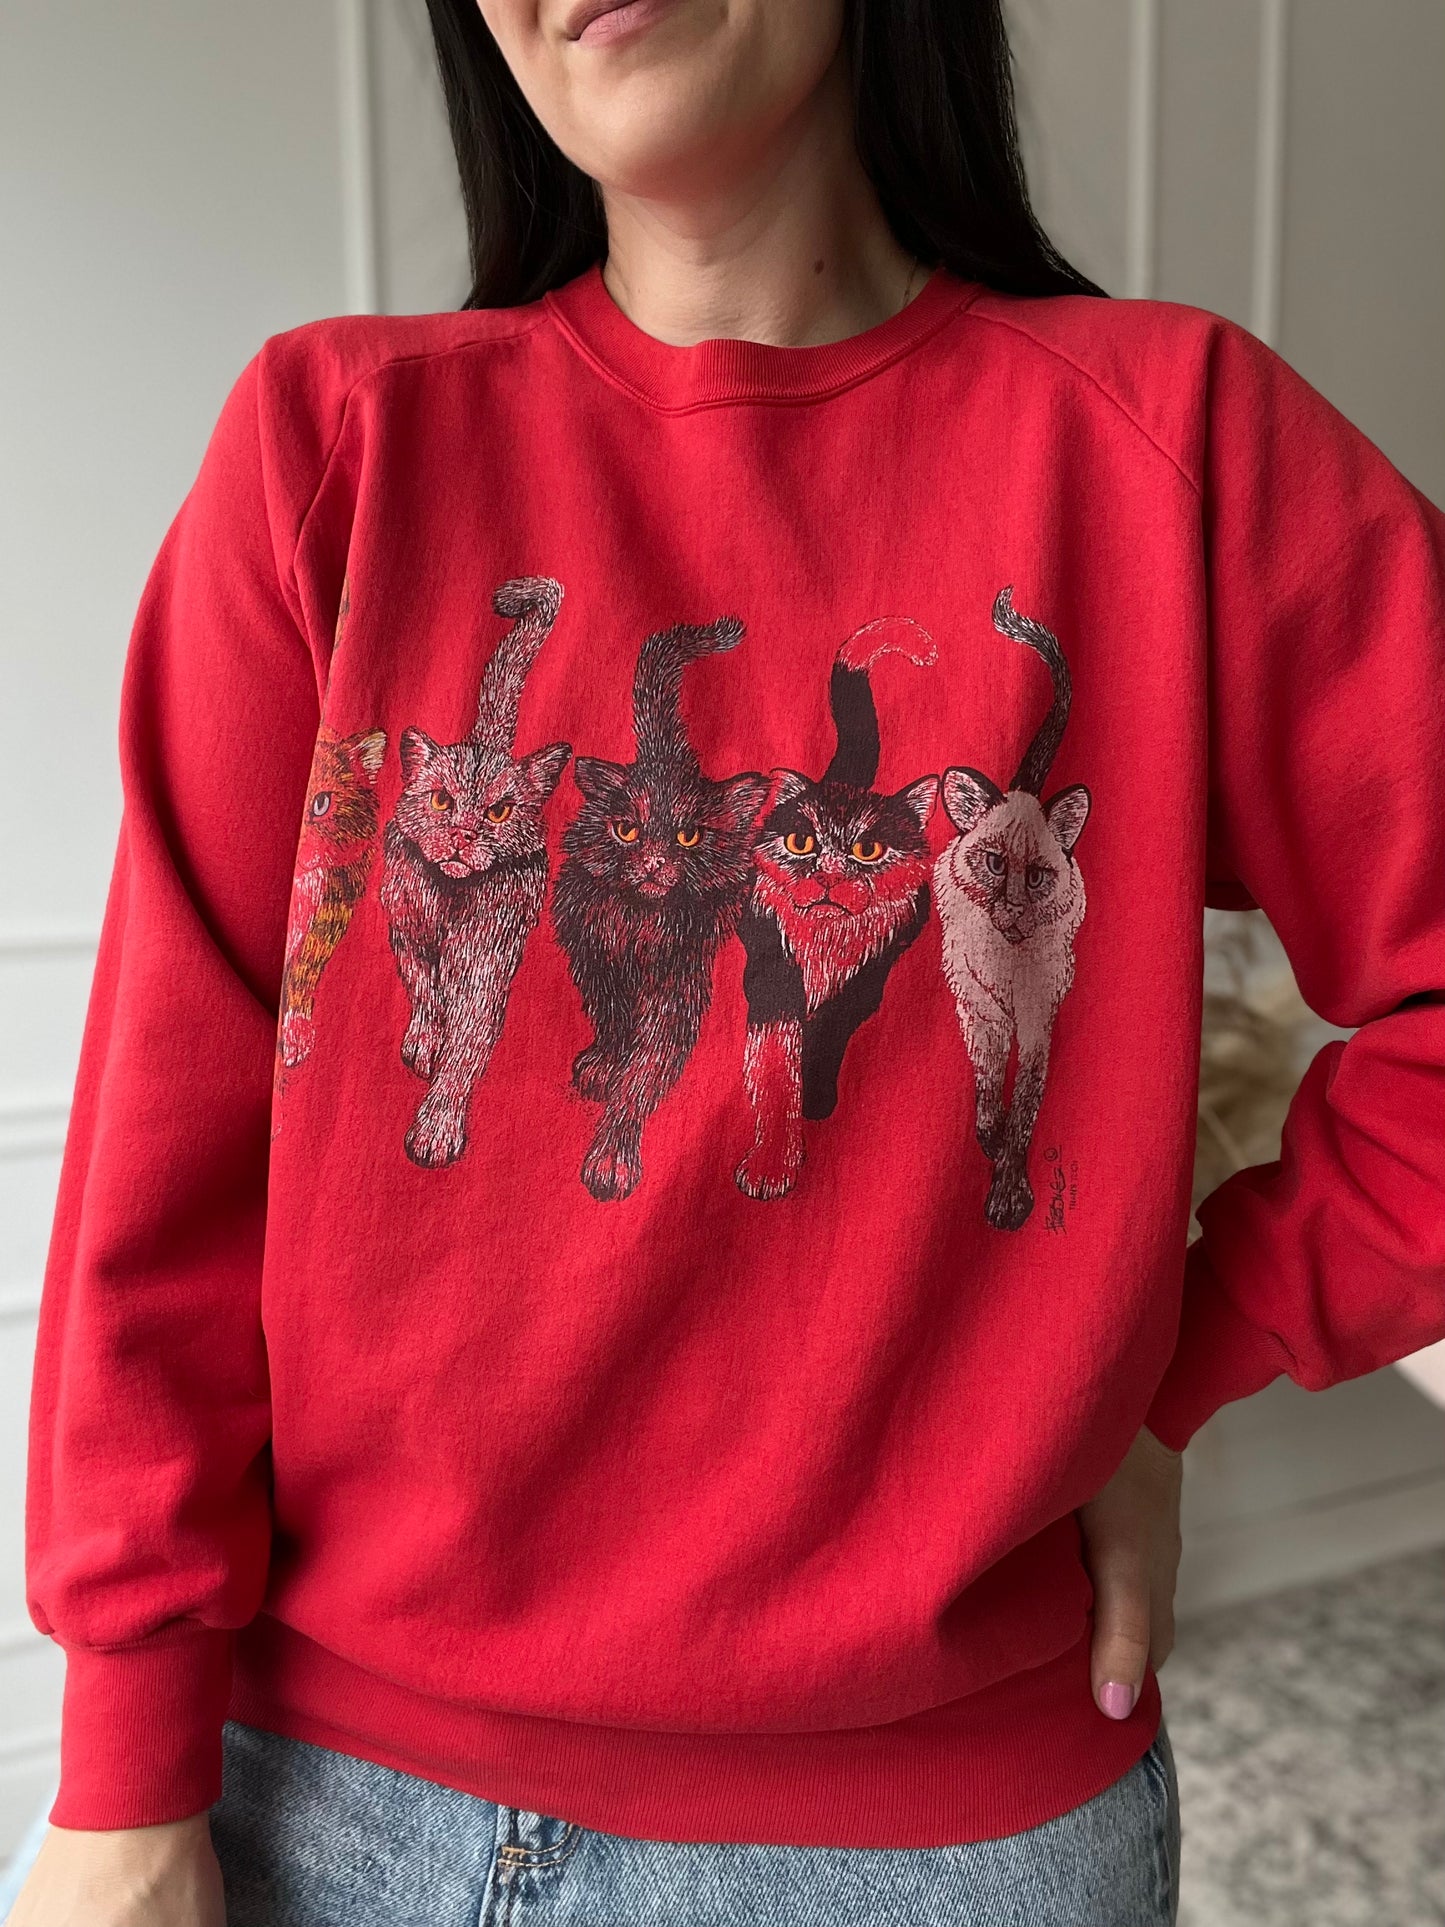 Vintage Cats Sweater  - Size S/M/L